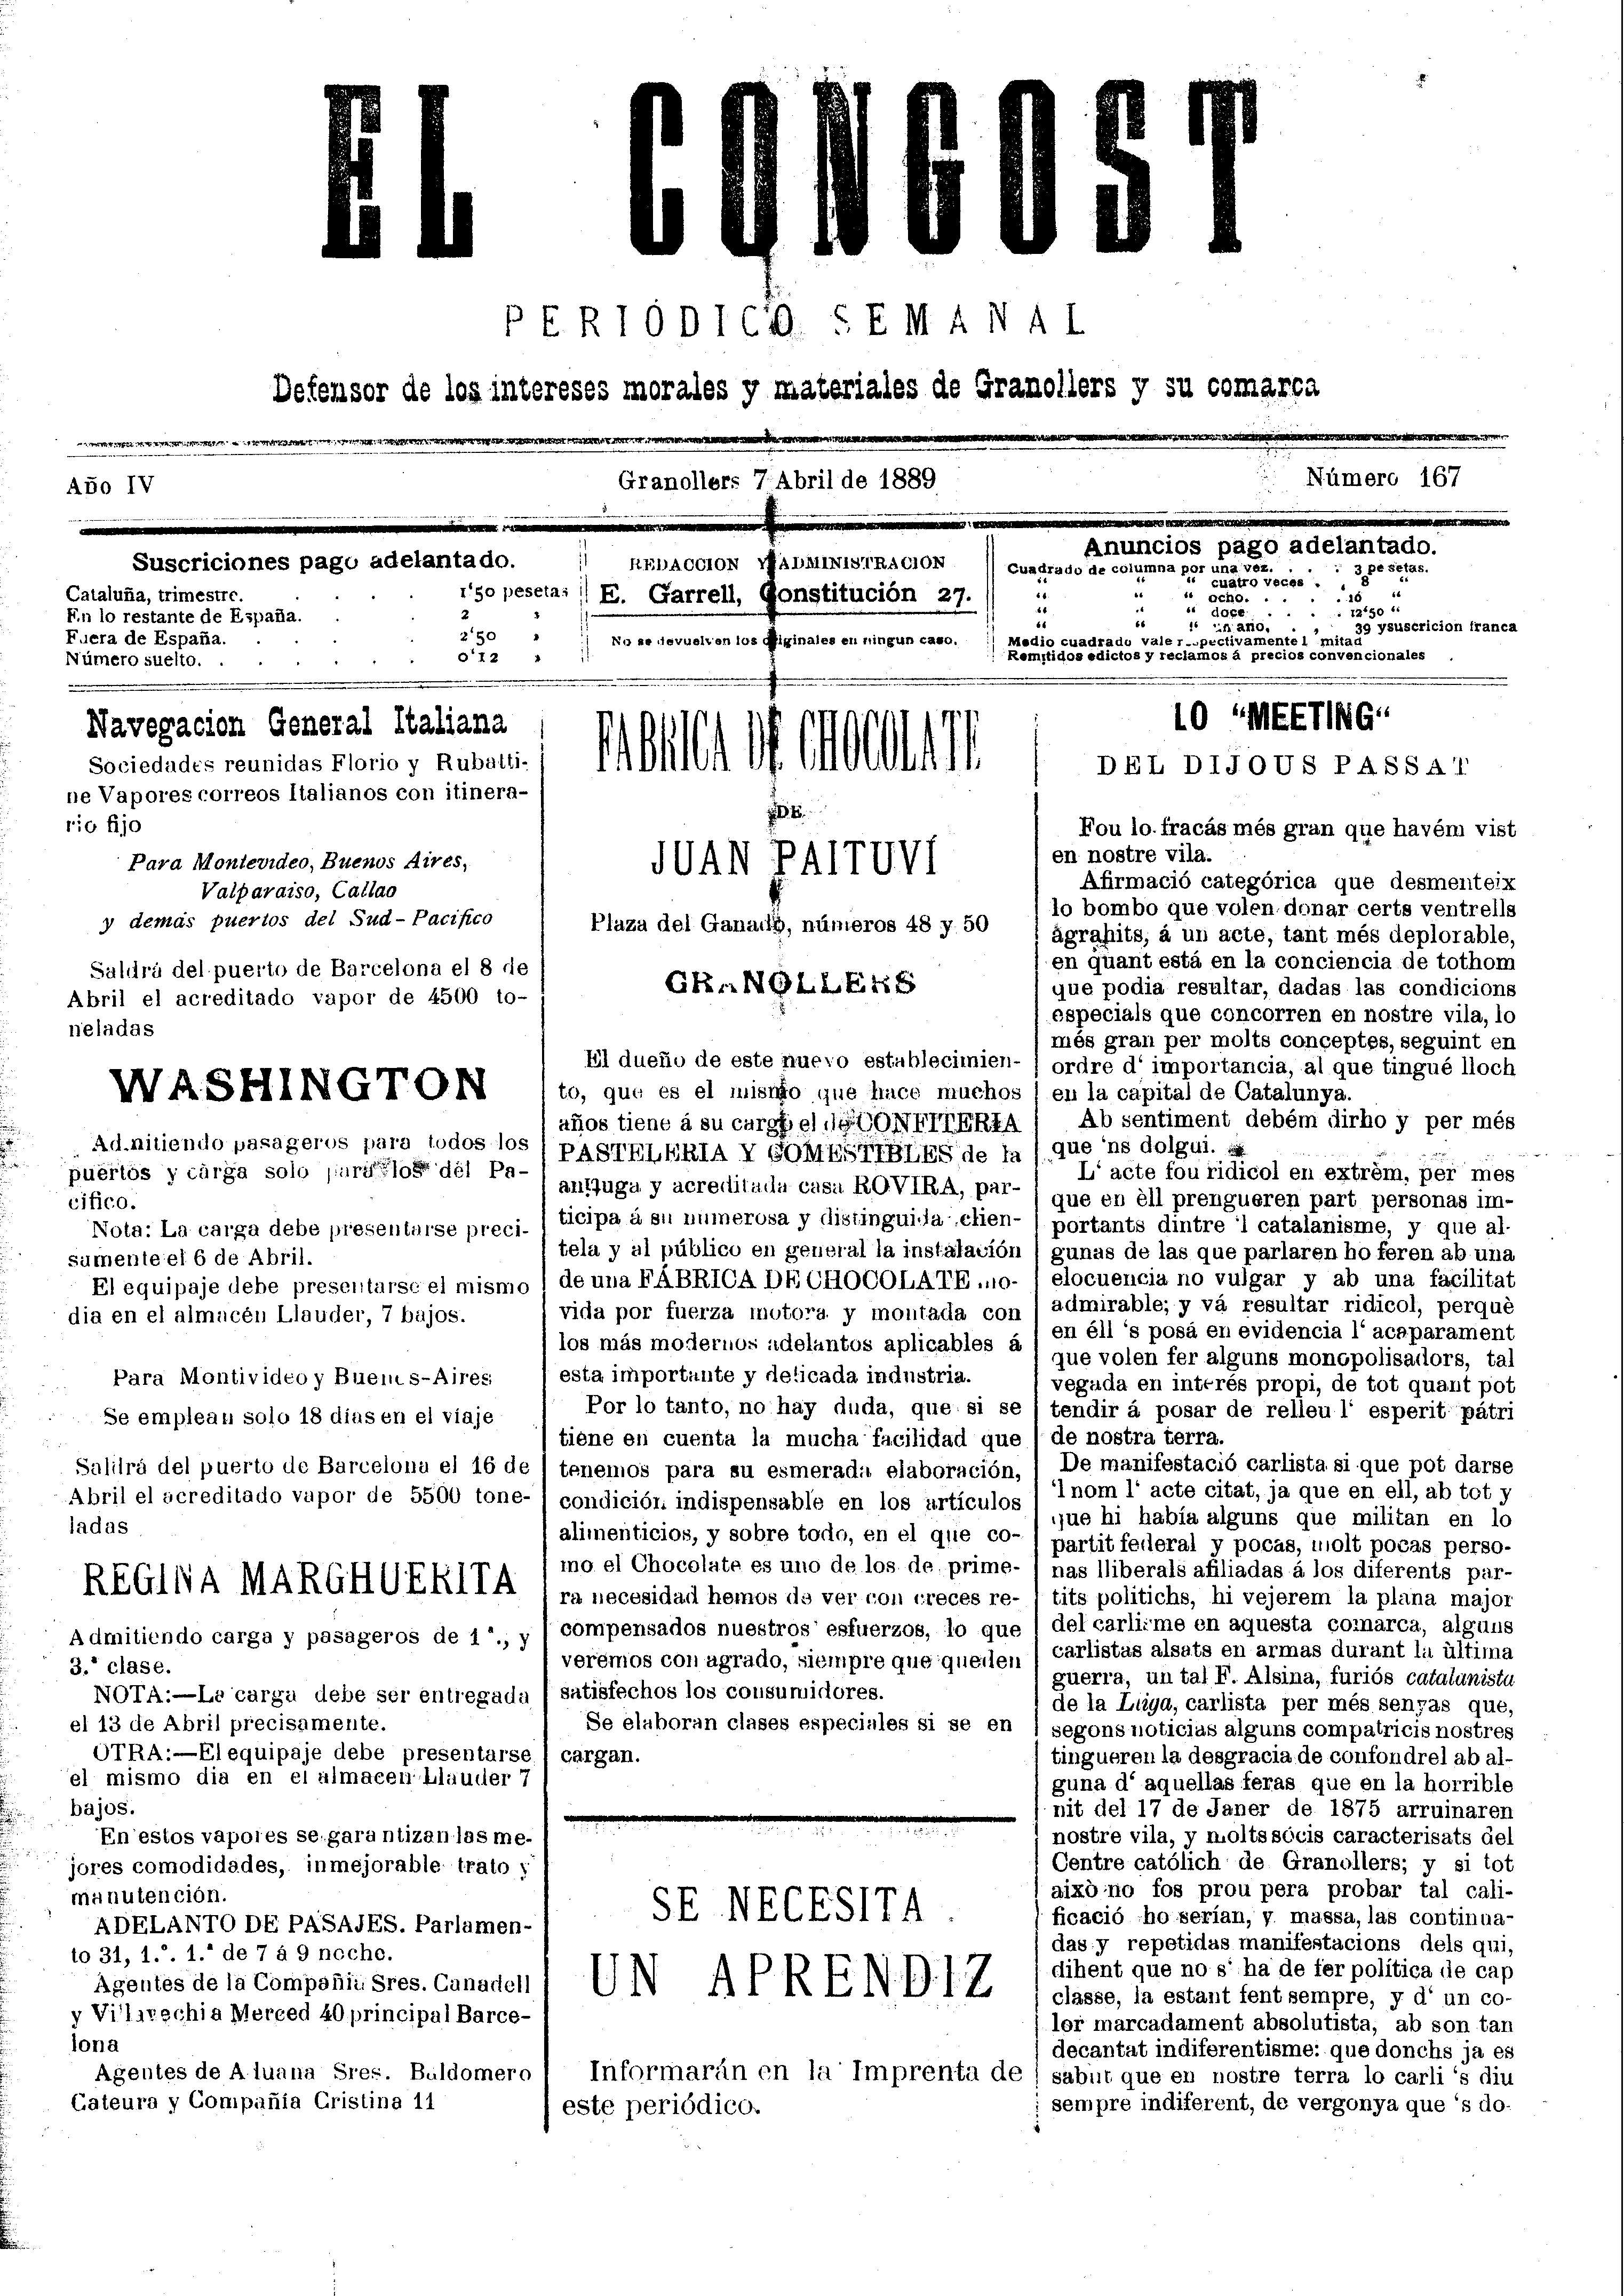 El Congost, 7/4/1889 [Ejemplar]